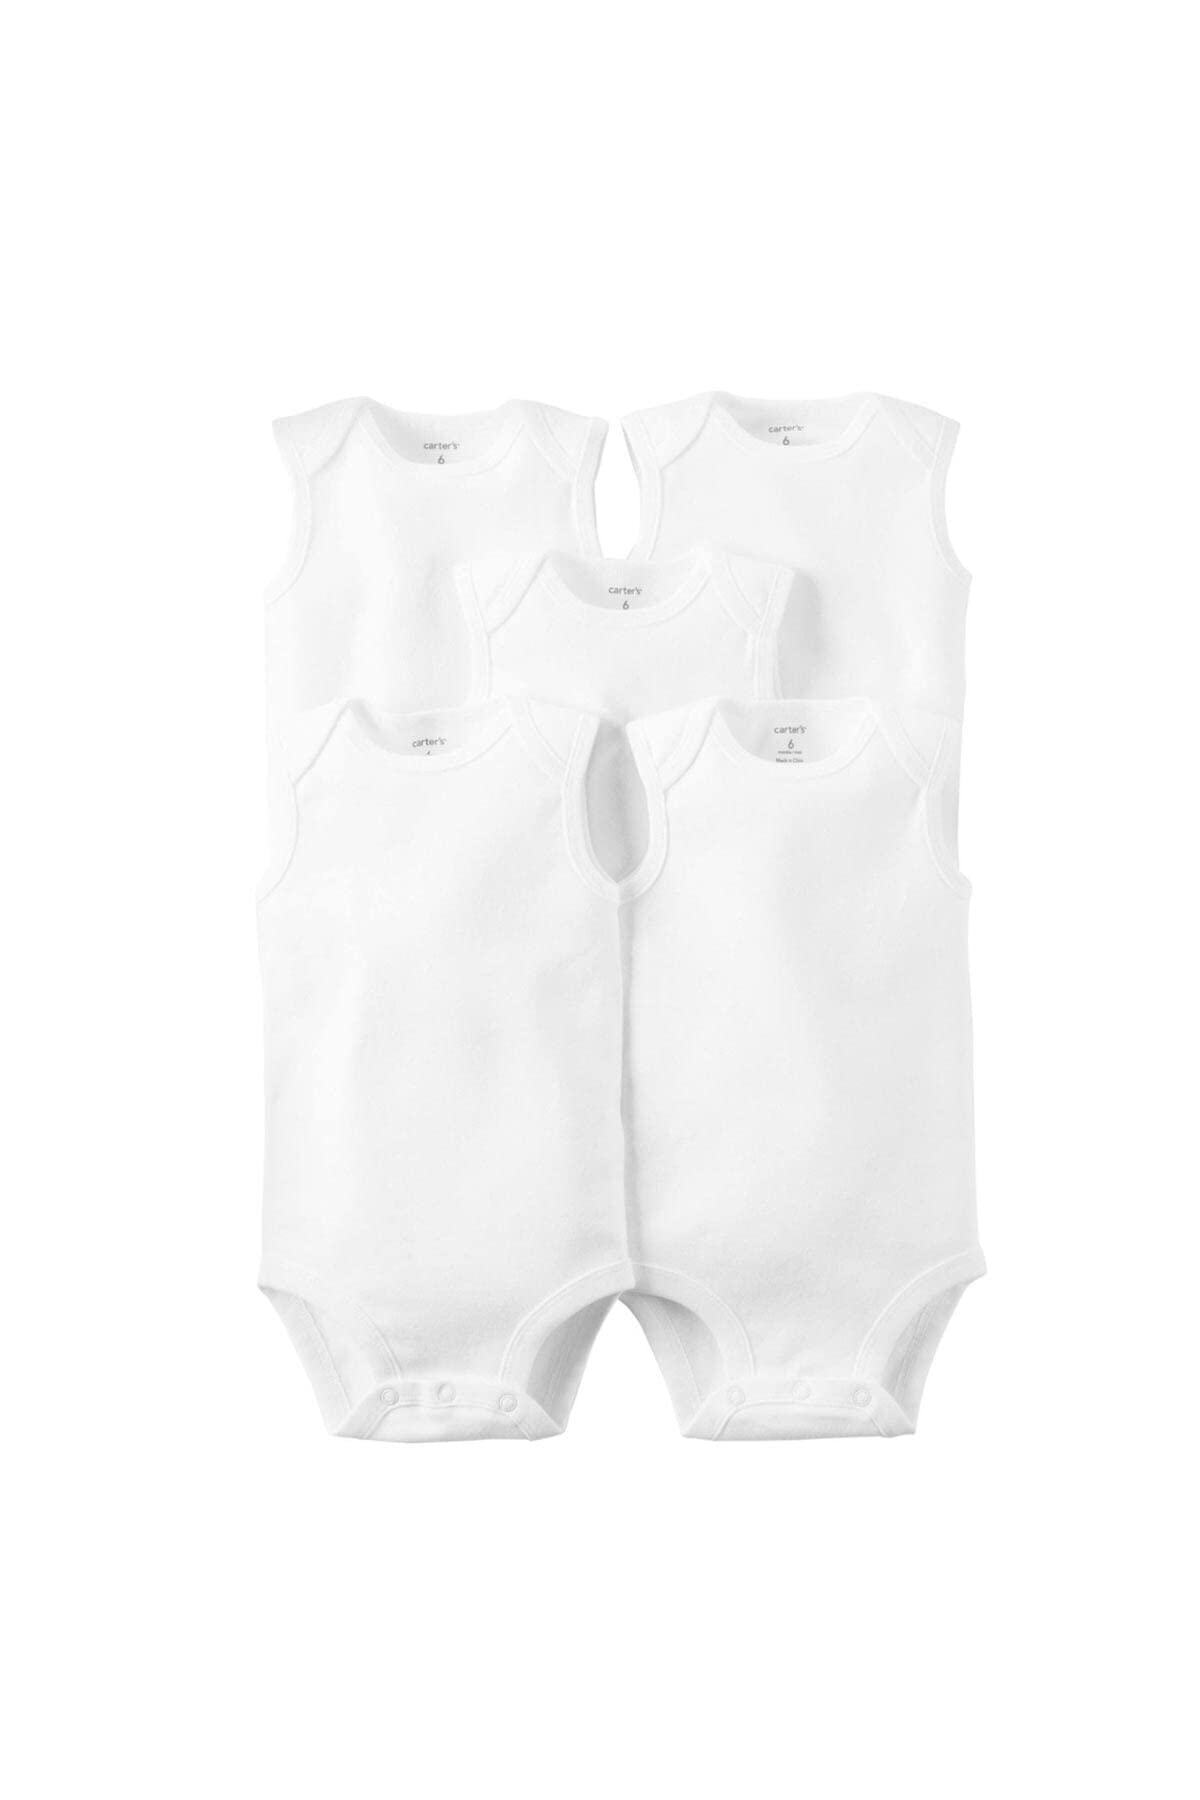 Carters Unisex Baby 5-Pack Sleeveless Original Bodysuits, White, 18M